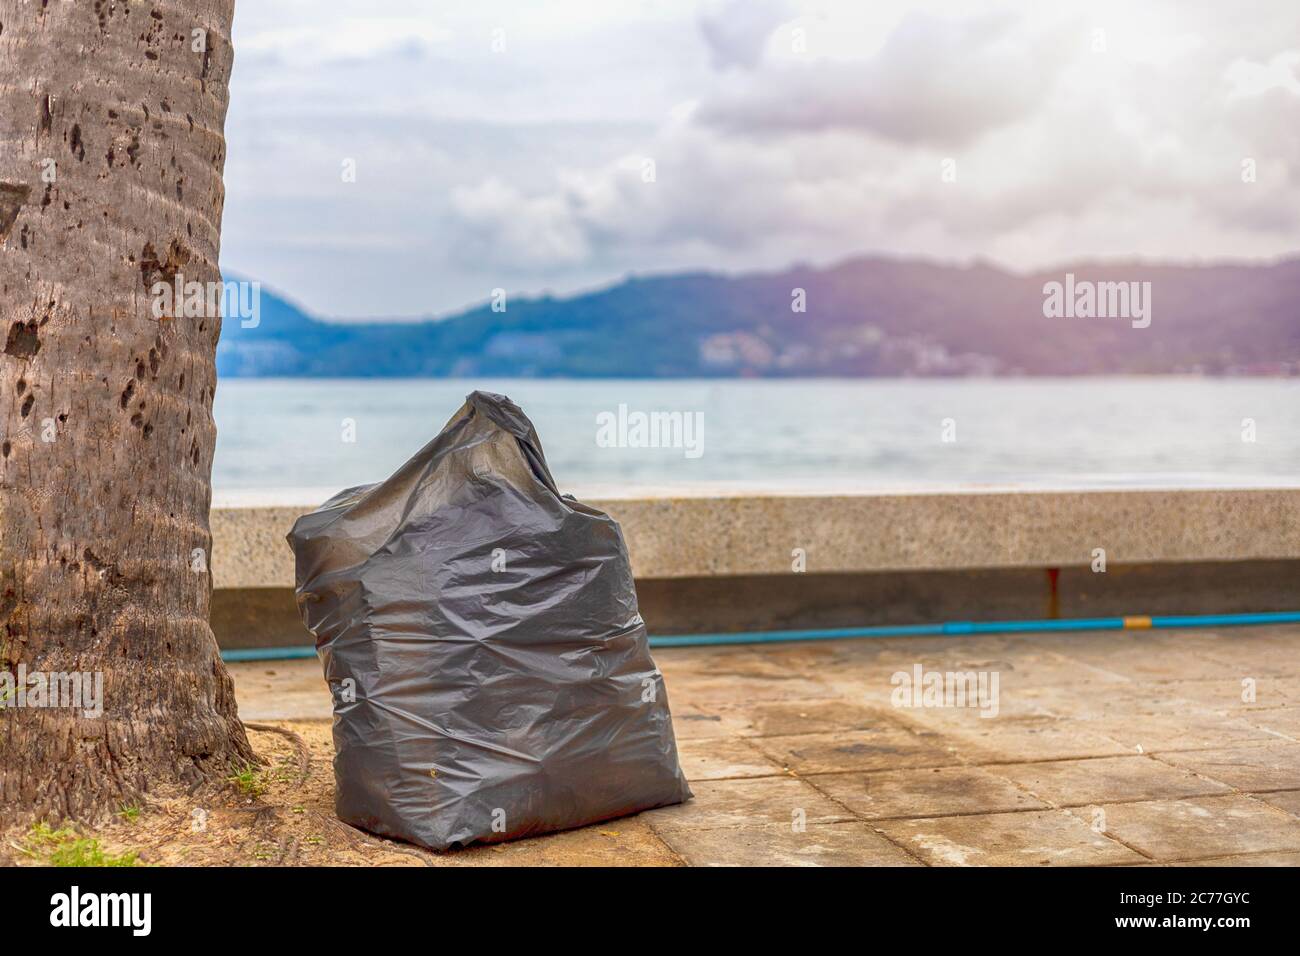 https://c8.alamy.com/comp/2C77GYC/environment-concept-big-plastic-garbage-bag-on-sidewalk-under-coconut-palm-tree-near-the-beach-2C77GYC.jpg